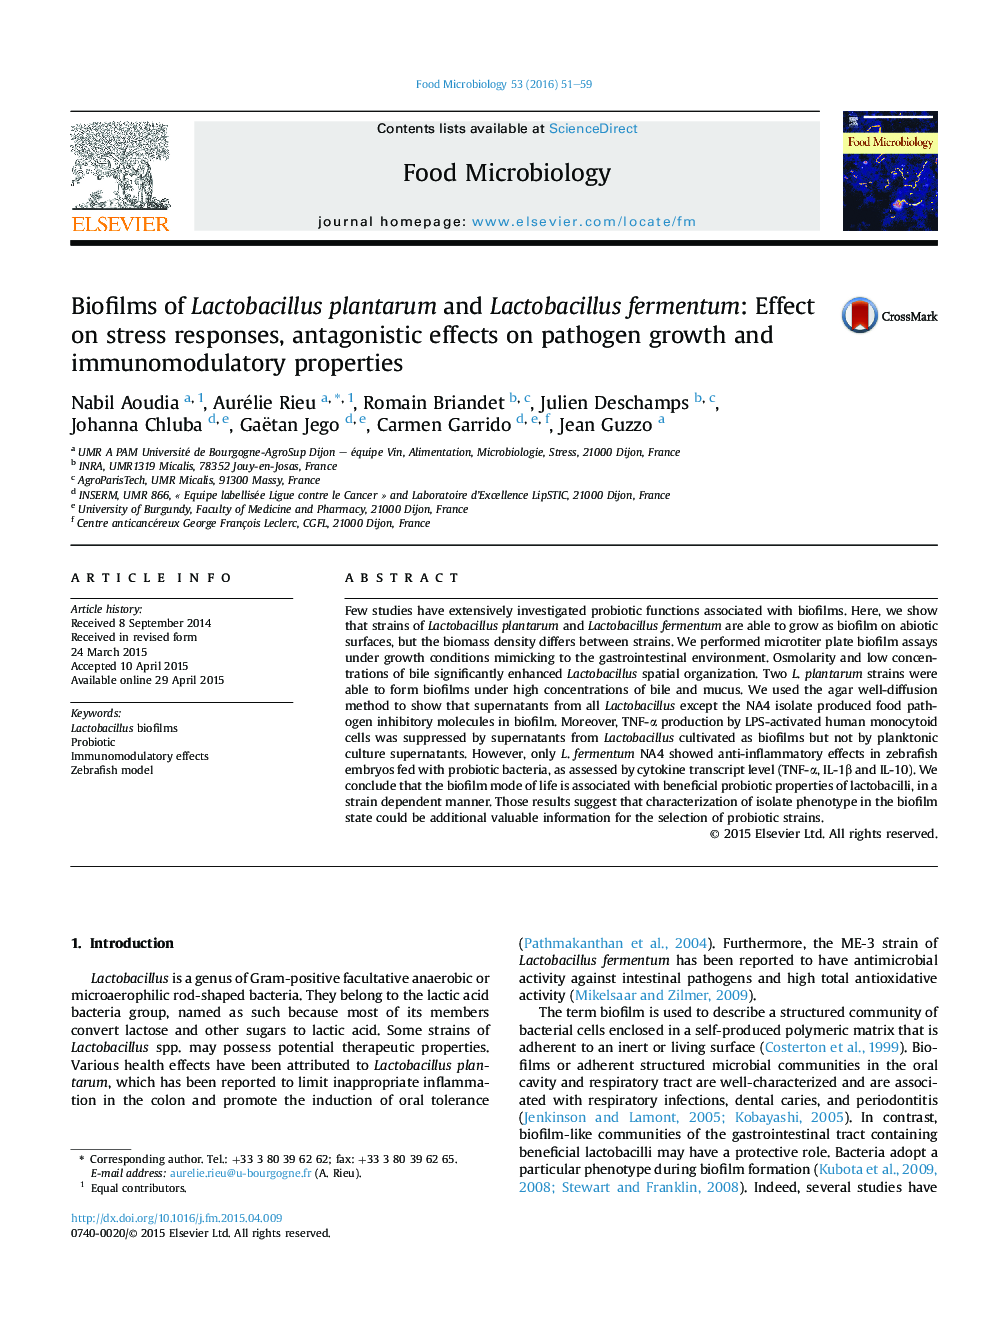 Biofilms of Lactobacillus plantarum and Lactobacillus fermentum: Effect on stress responses, antagonistic effects on pathogen growth and immunomodulatory properties